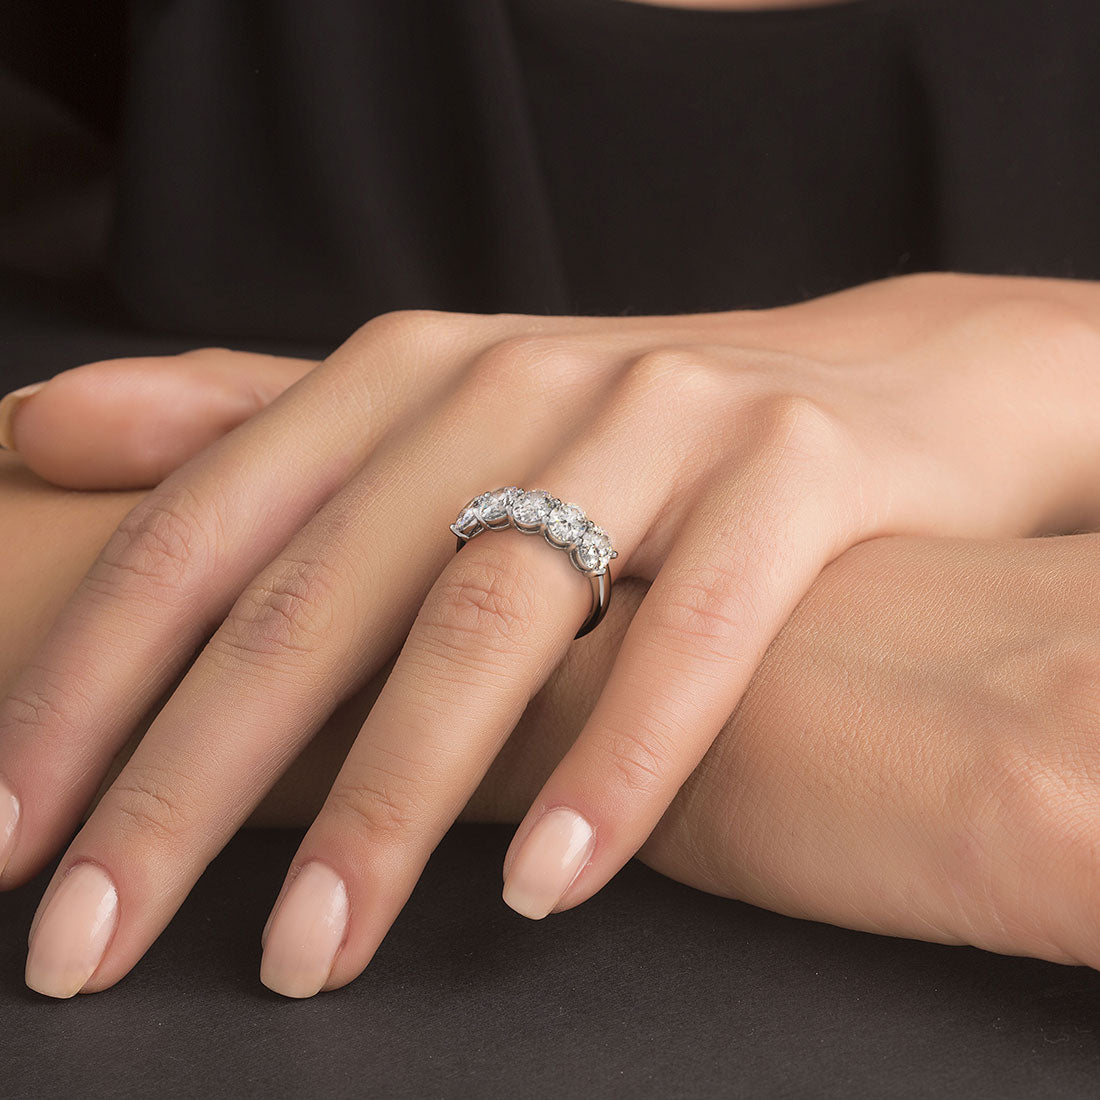 2.00 Carat 5 Stone Oval Cut Diamond Wedding Band Anniversary Ring Set in 14k White Gold